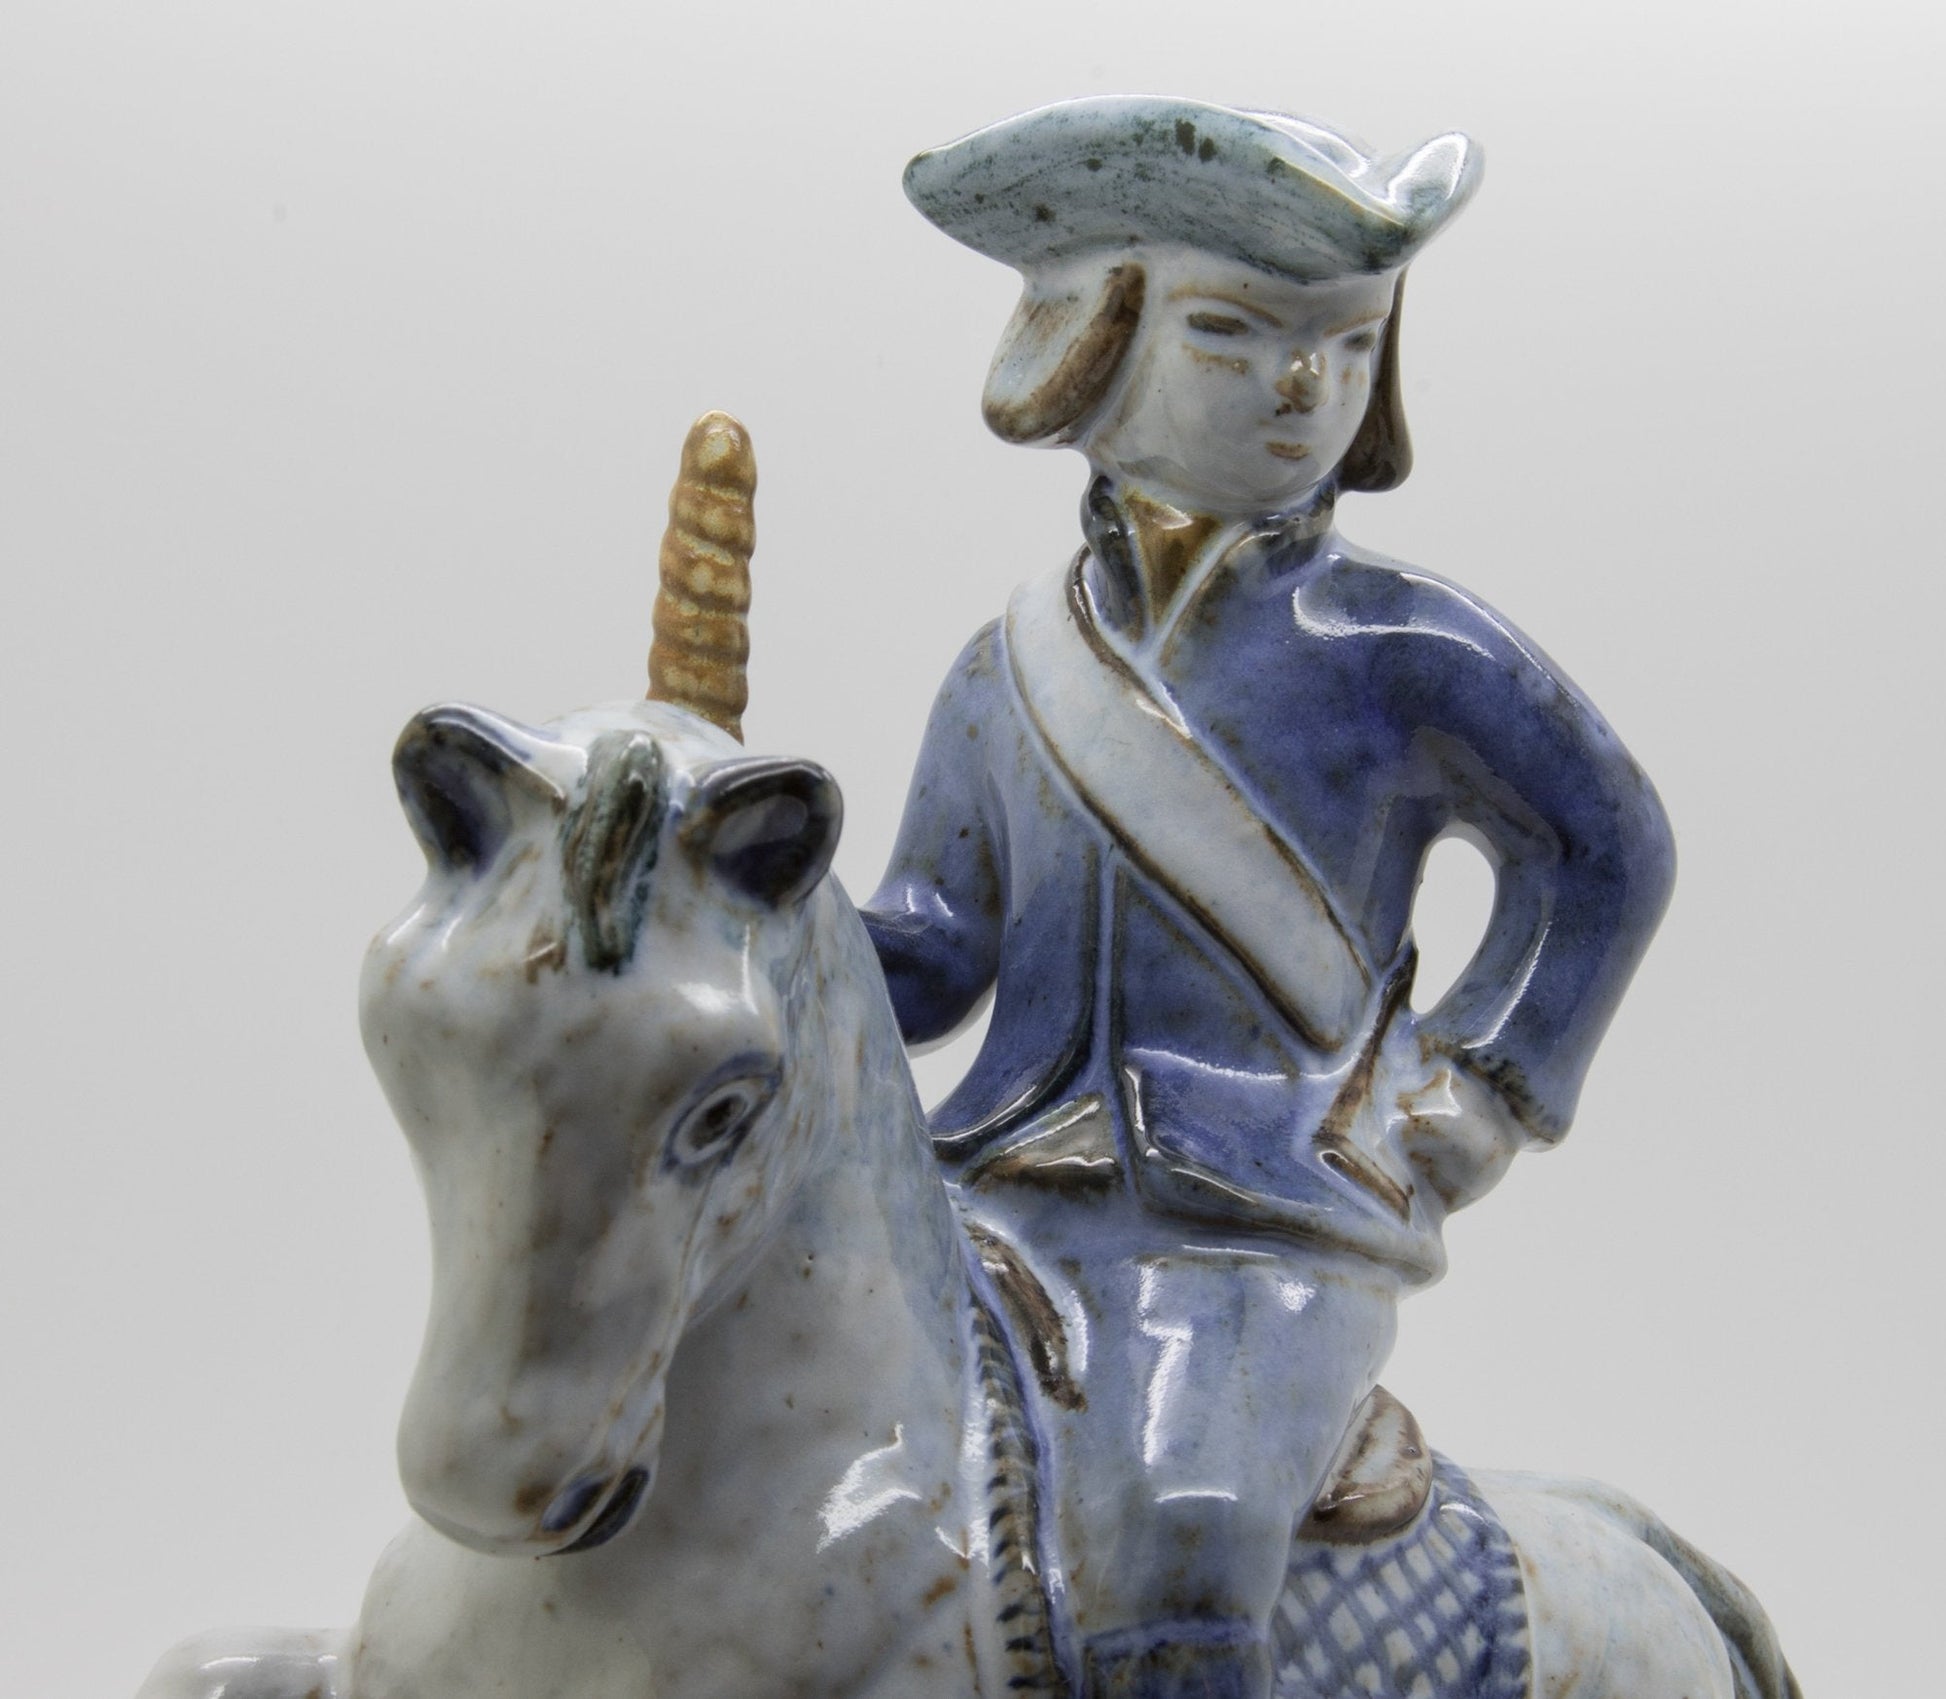 GERTRUD KUDIELKA L. Hjorth Decorated Rider on Horse Ceramic Sculpture Mollaris.com 